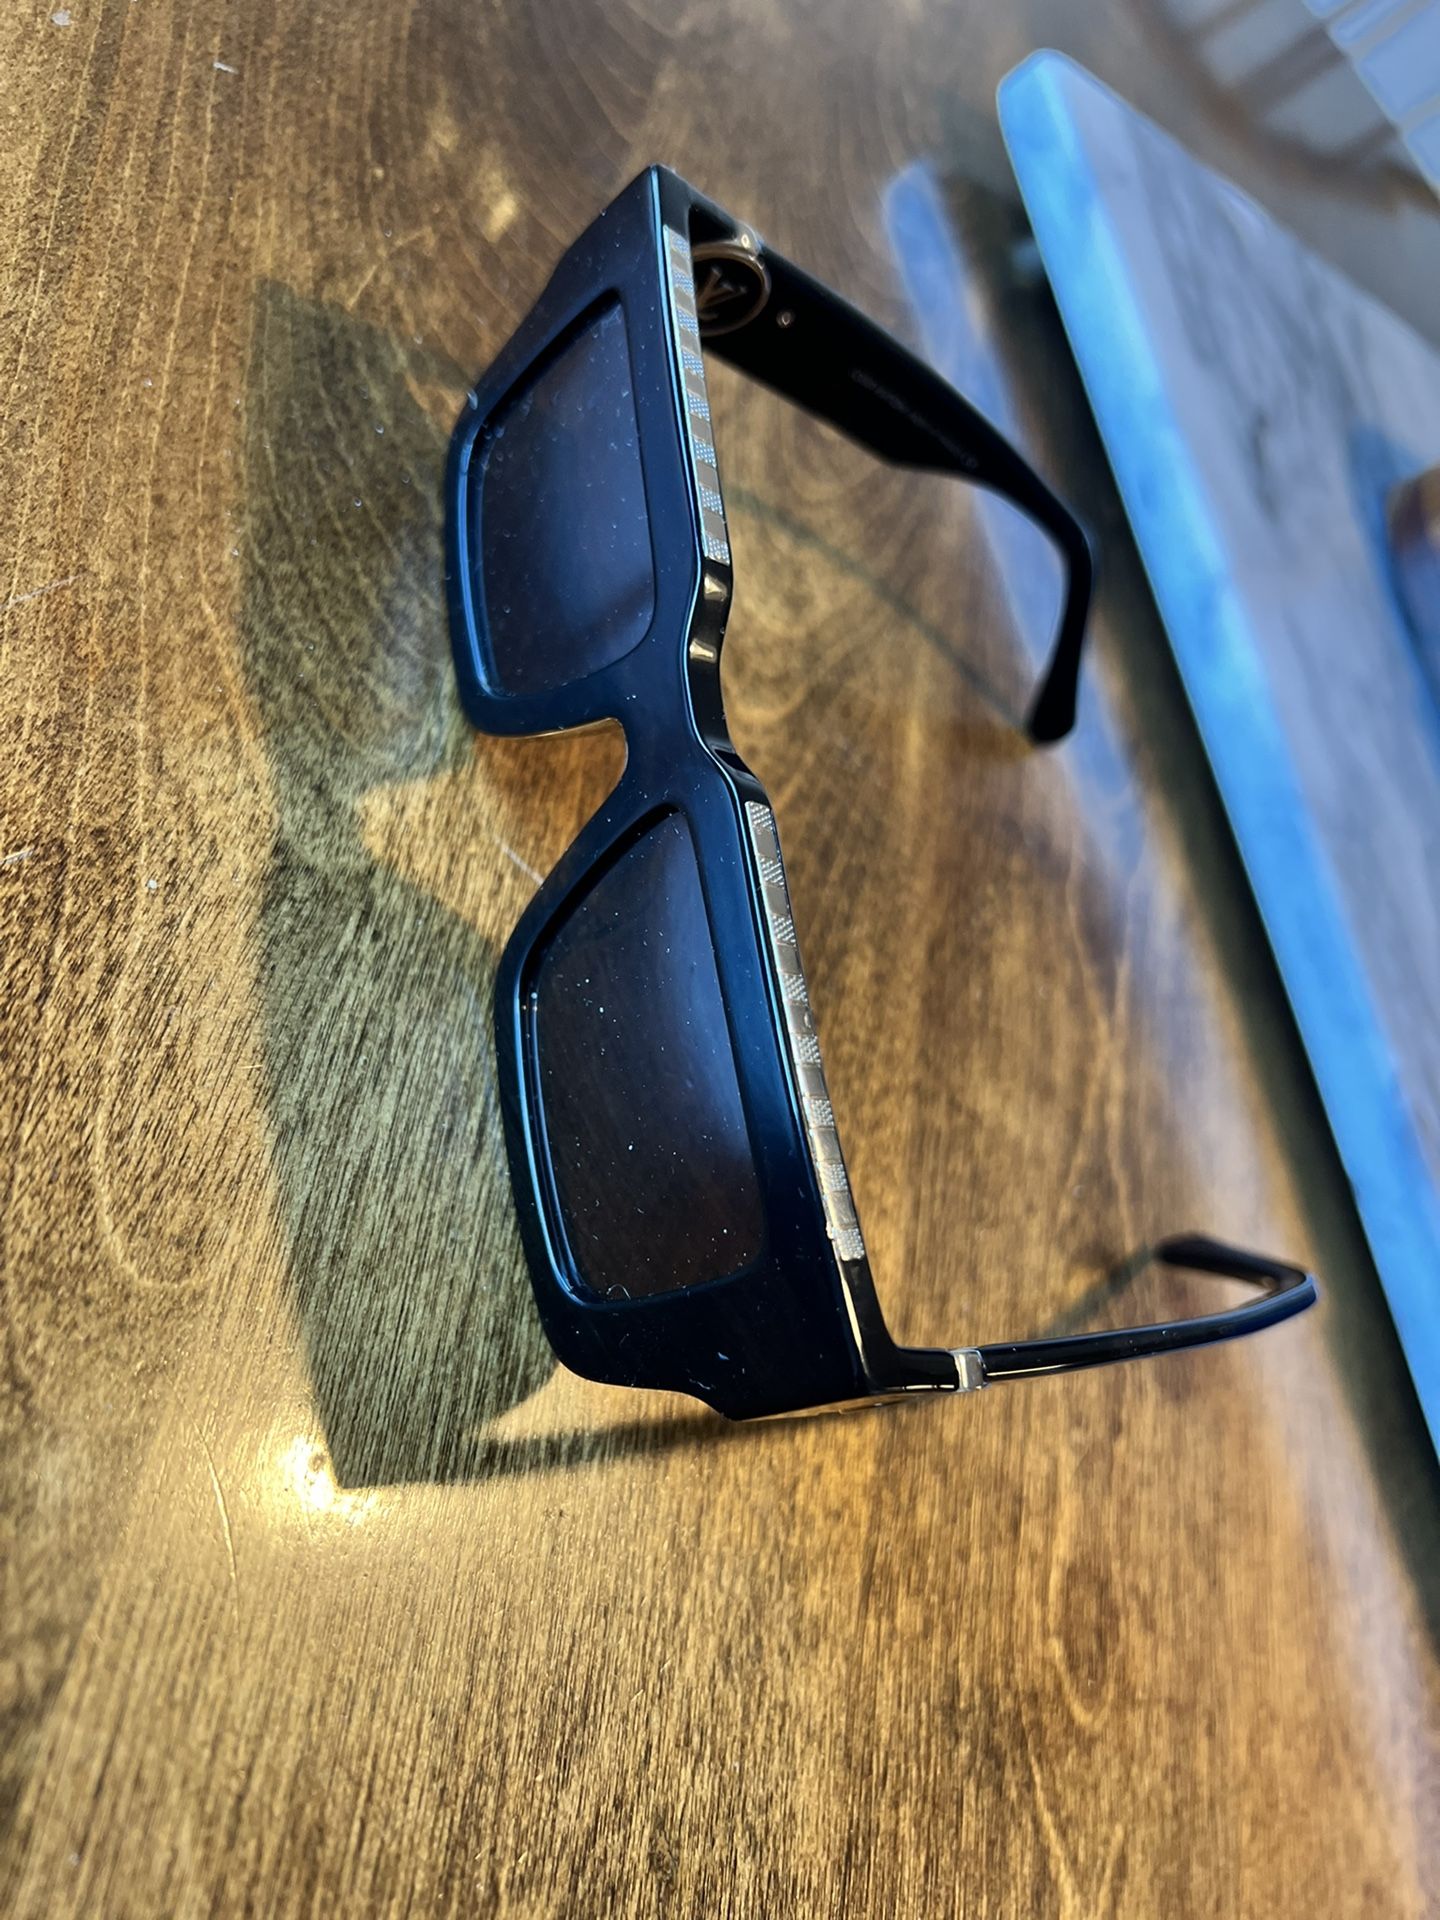 LV Waimea L Sunglasses for Sale in Lynnwood, WA - OfferUp